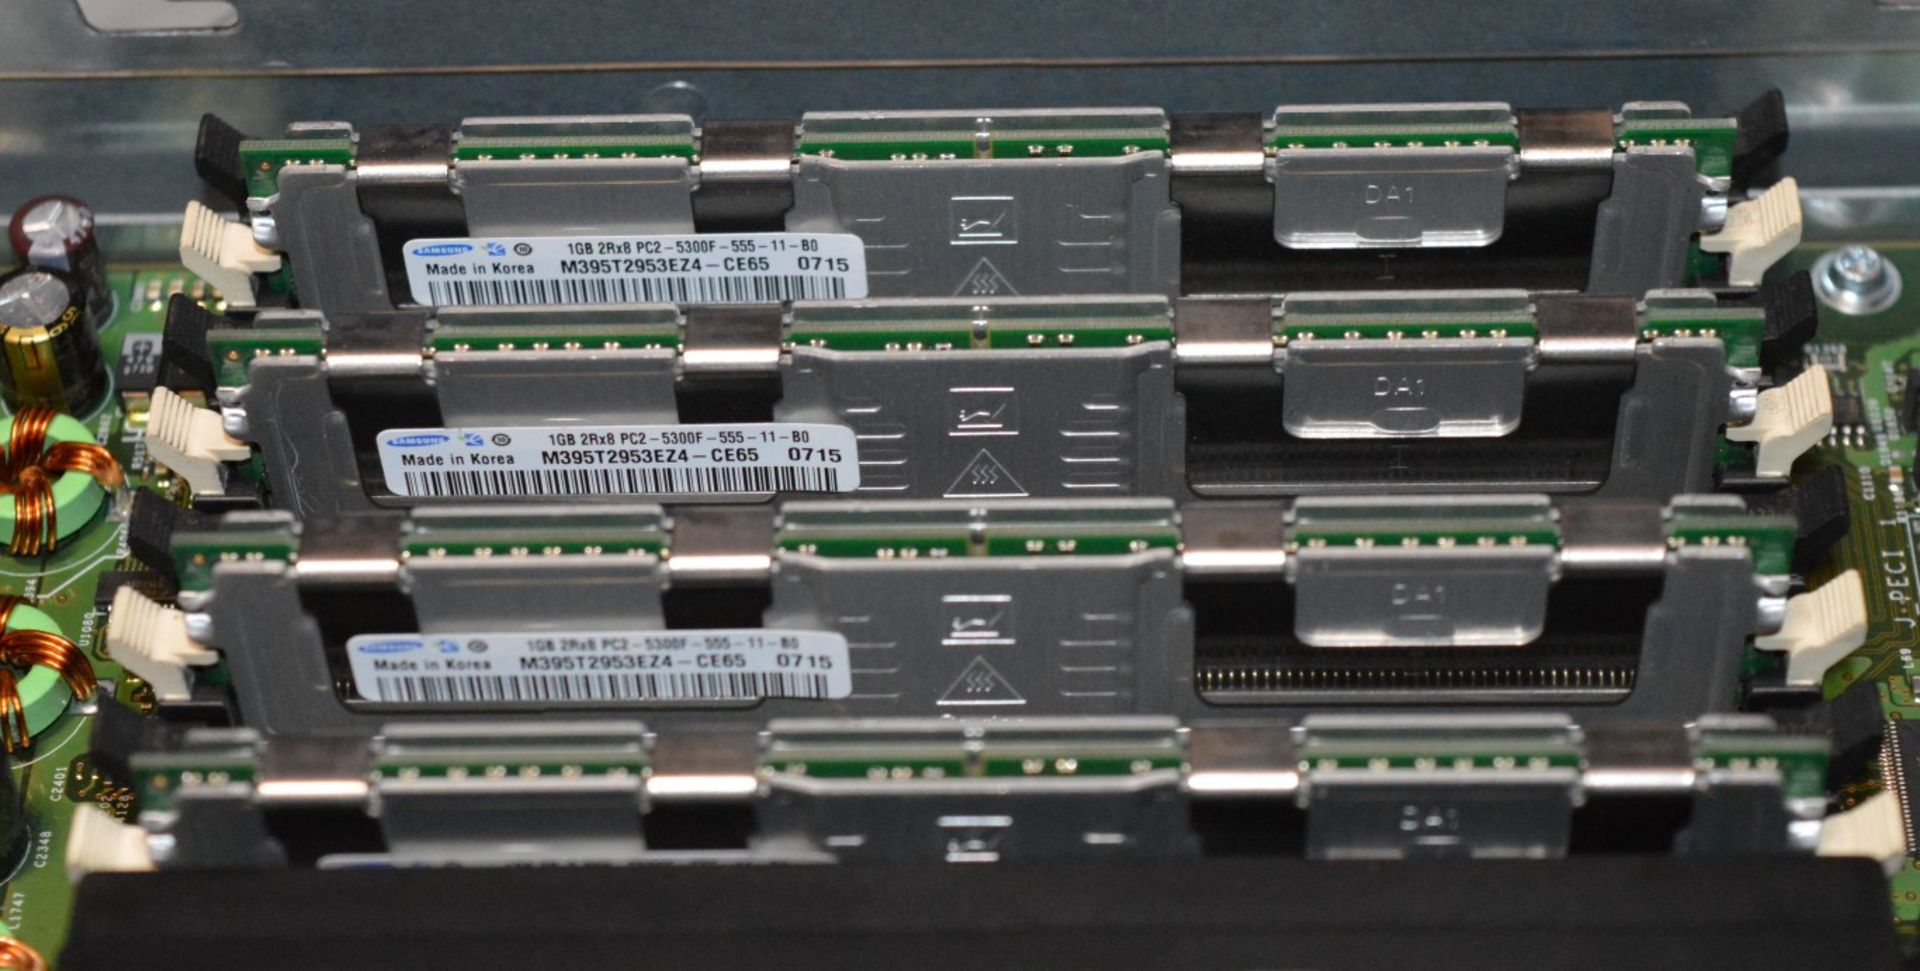 1 x Dell Poweredge 1950 1U Rackmount File Server - 2ghz Intel Quad Core Processor - 4gb Ram - 2 x - Image 7 of 7